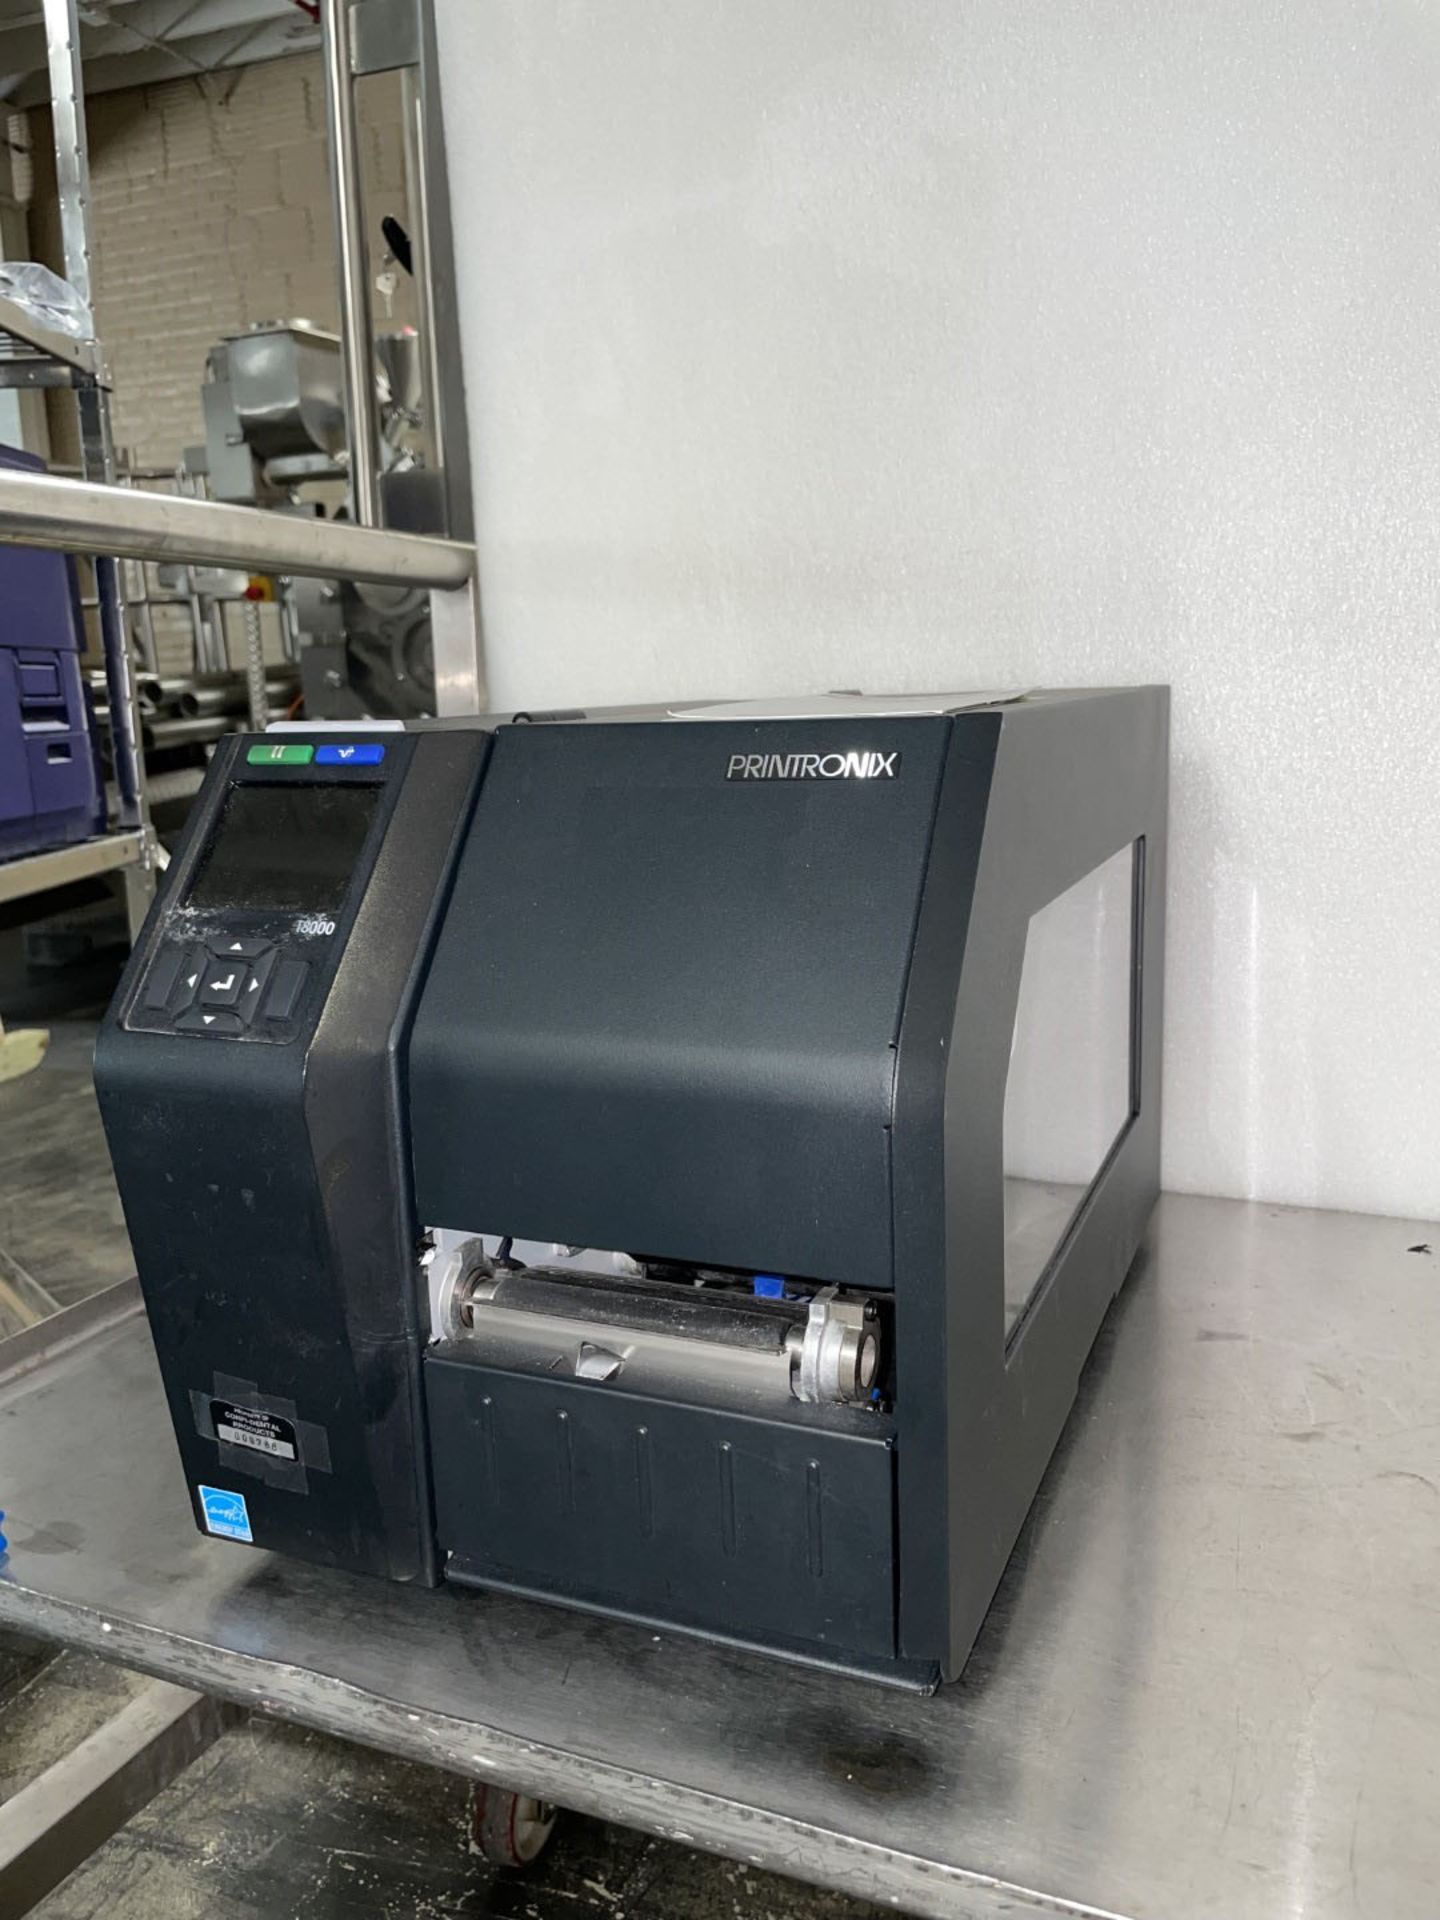 Printronix thermal printer